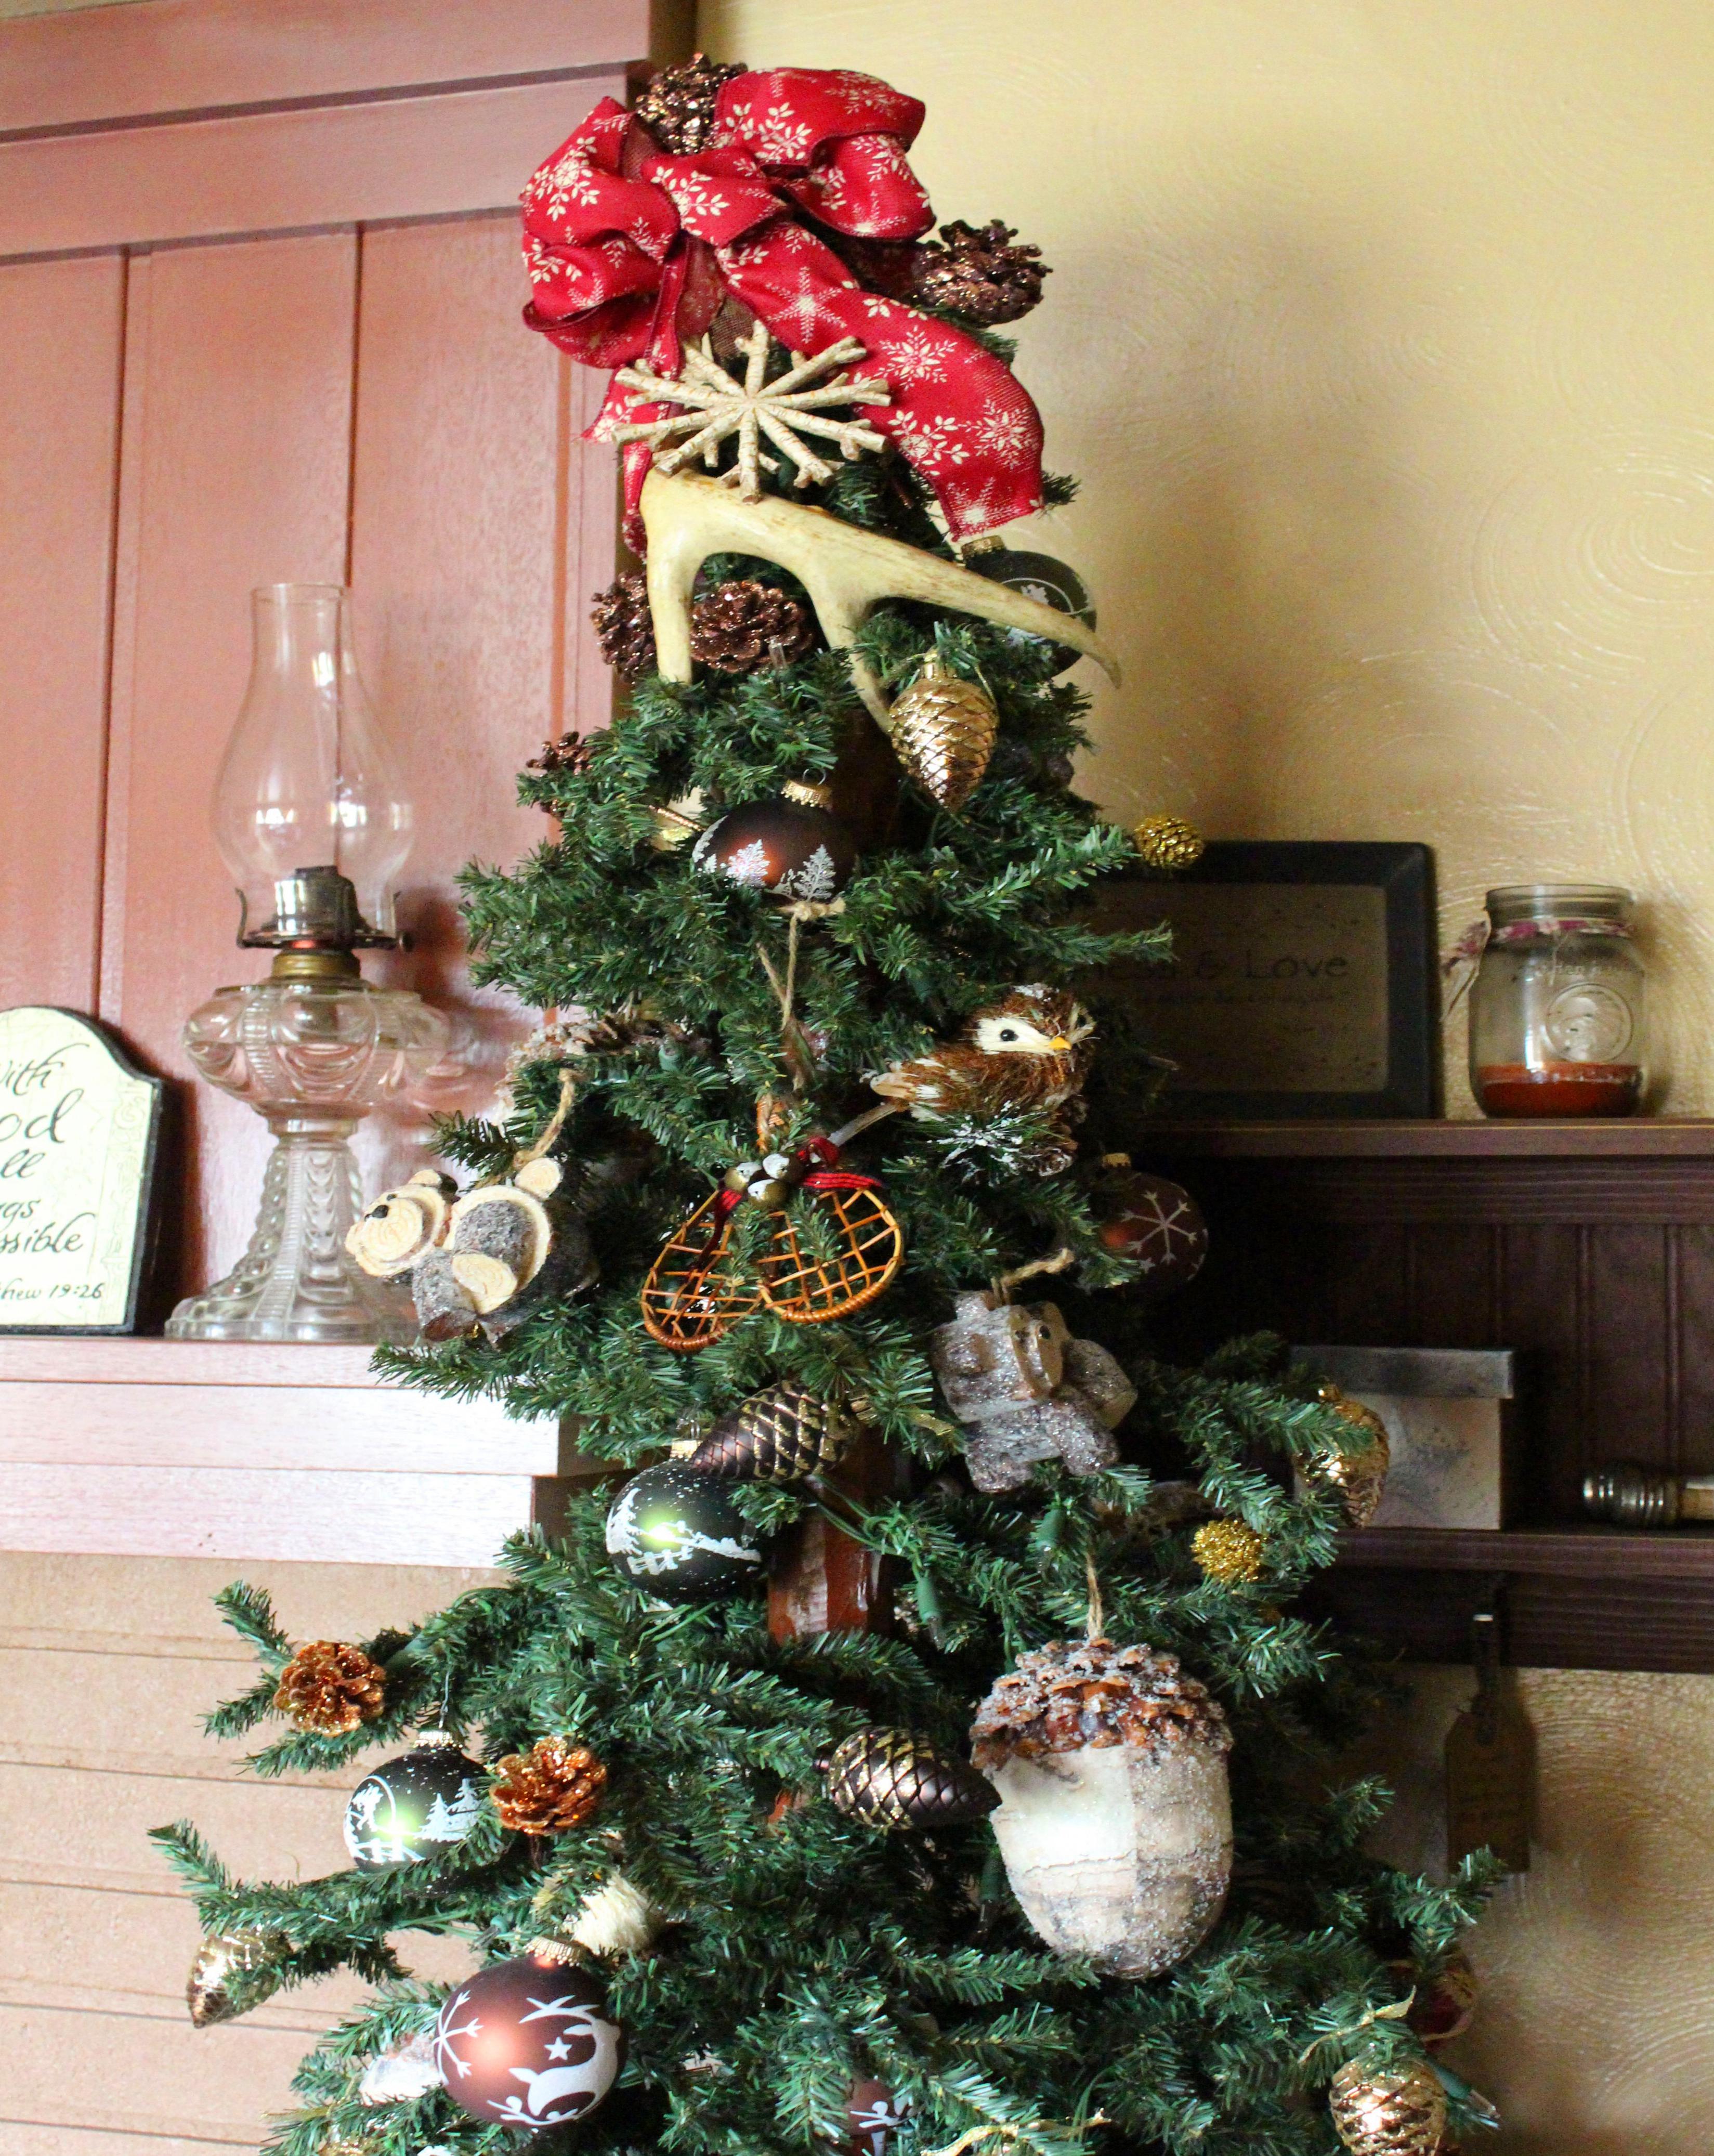 65+ Pretty DIY Christmas Tree Decor Ideas #Christmas #ChristmasTree